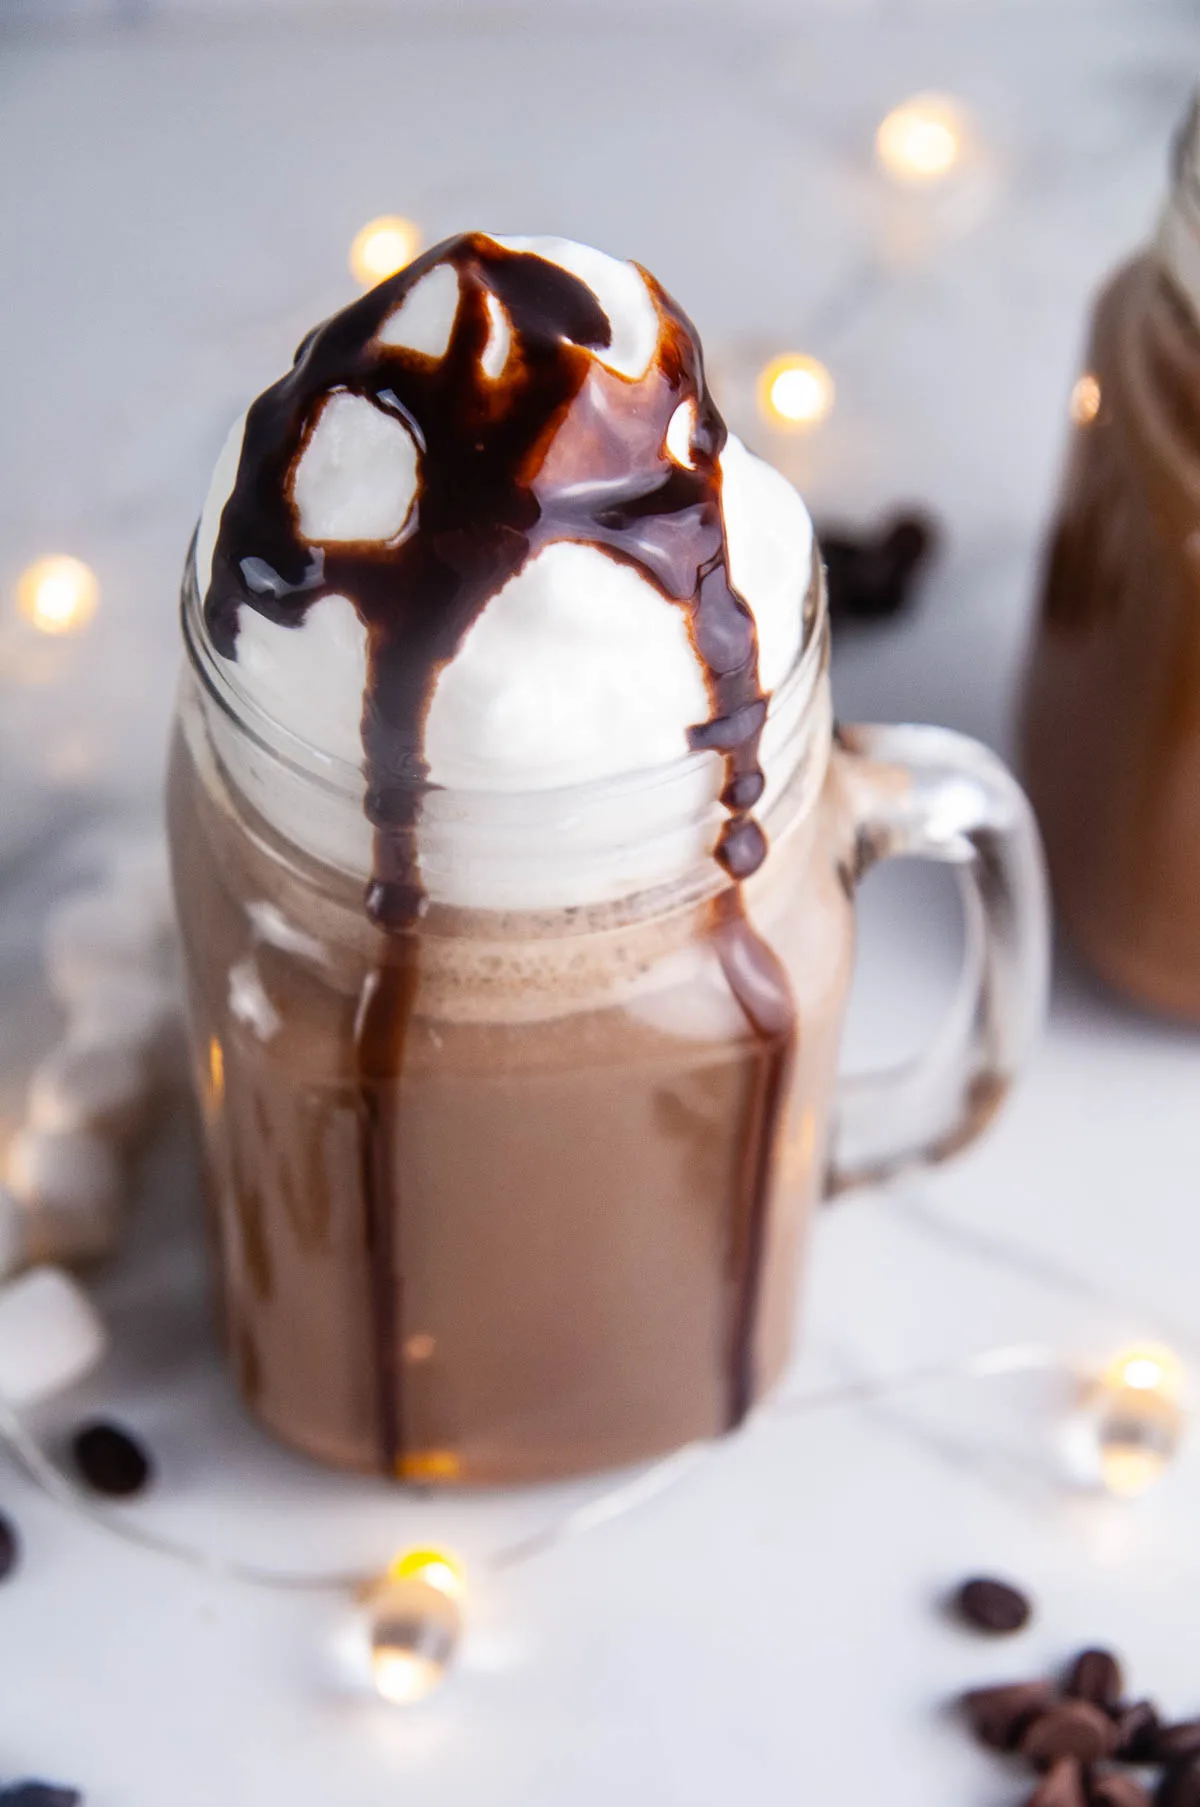 Hot Cocoa Recipe Hacks for the Holidays